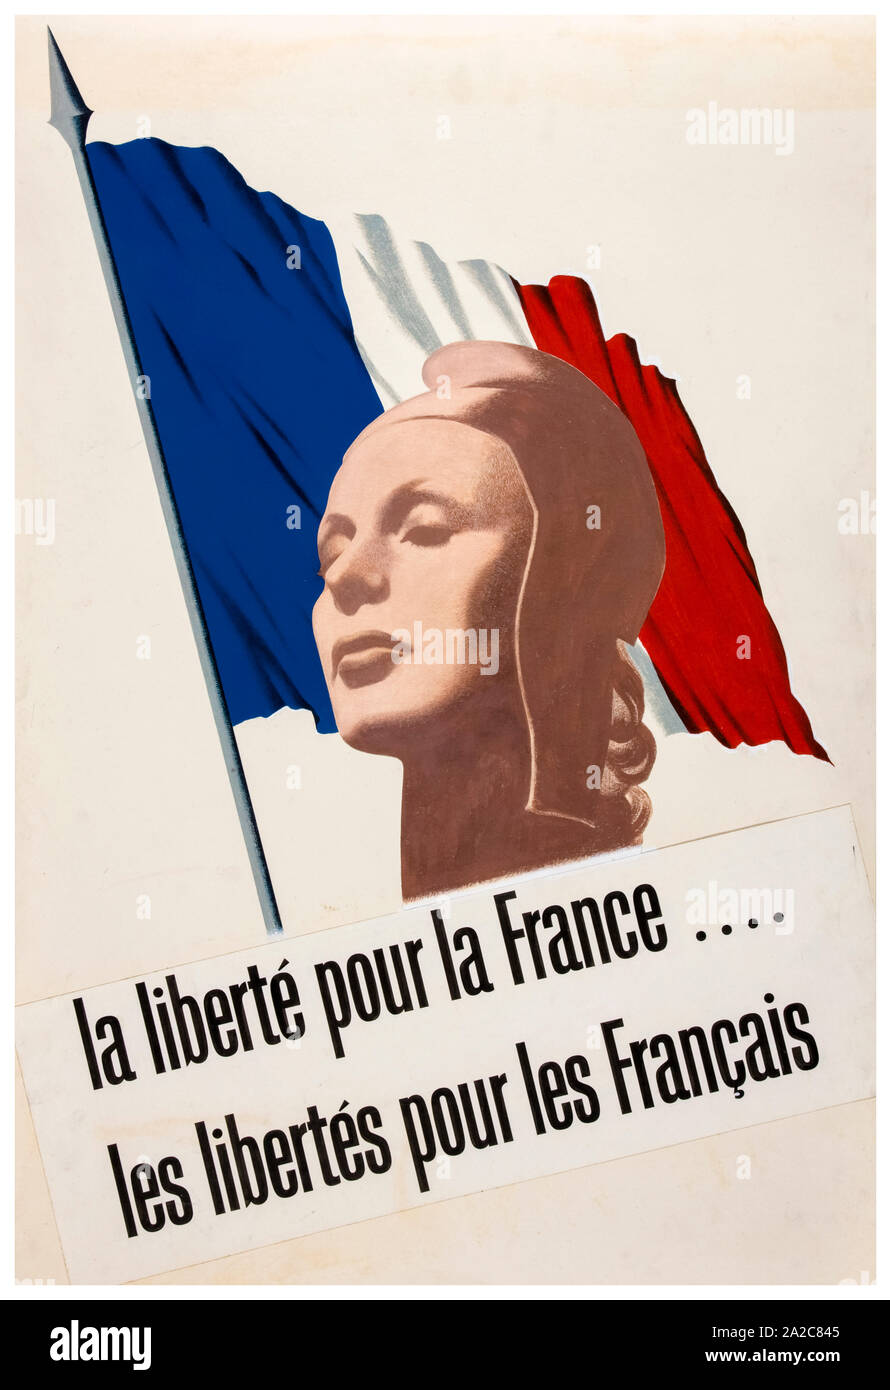 British, WW2, Unity of Strength, Inter-allied co-operation, La liberté pour la France, Les libertés pour les Français, (Freedom for France, Freedom for the French), poster, 1939-1946 Stock Photo